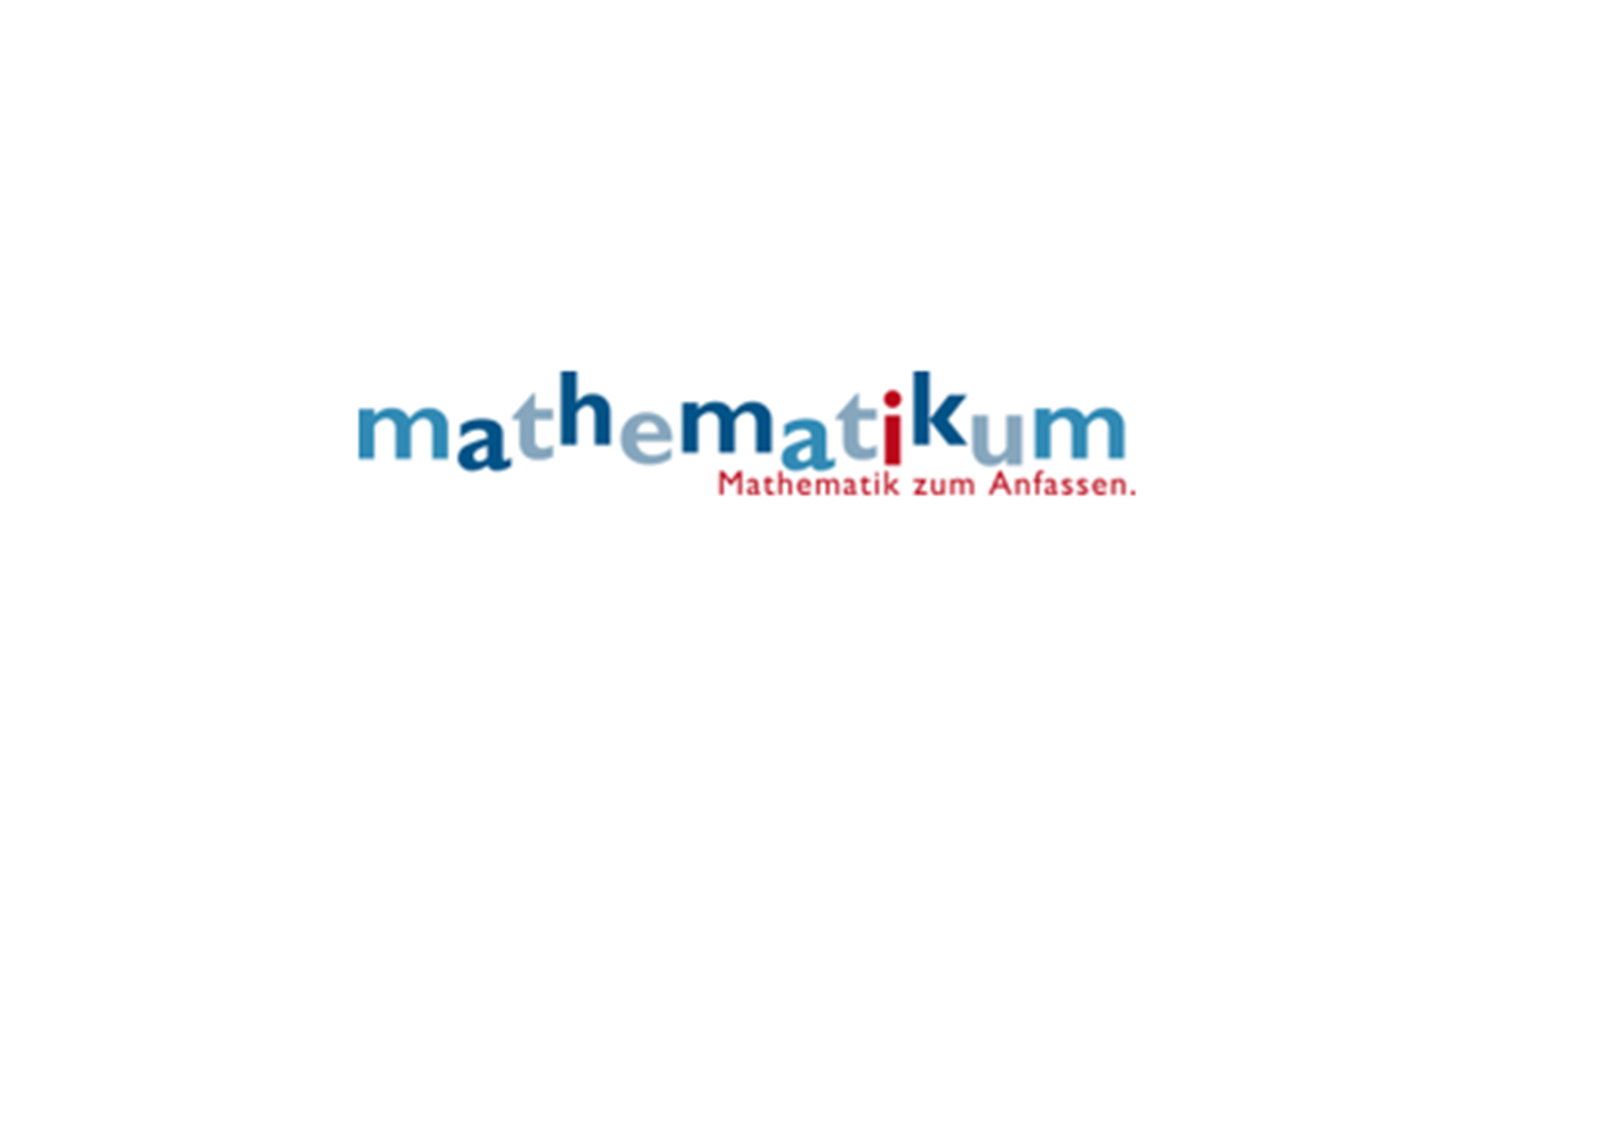 Mathematikum